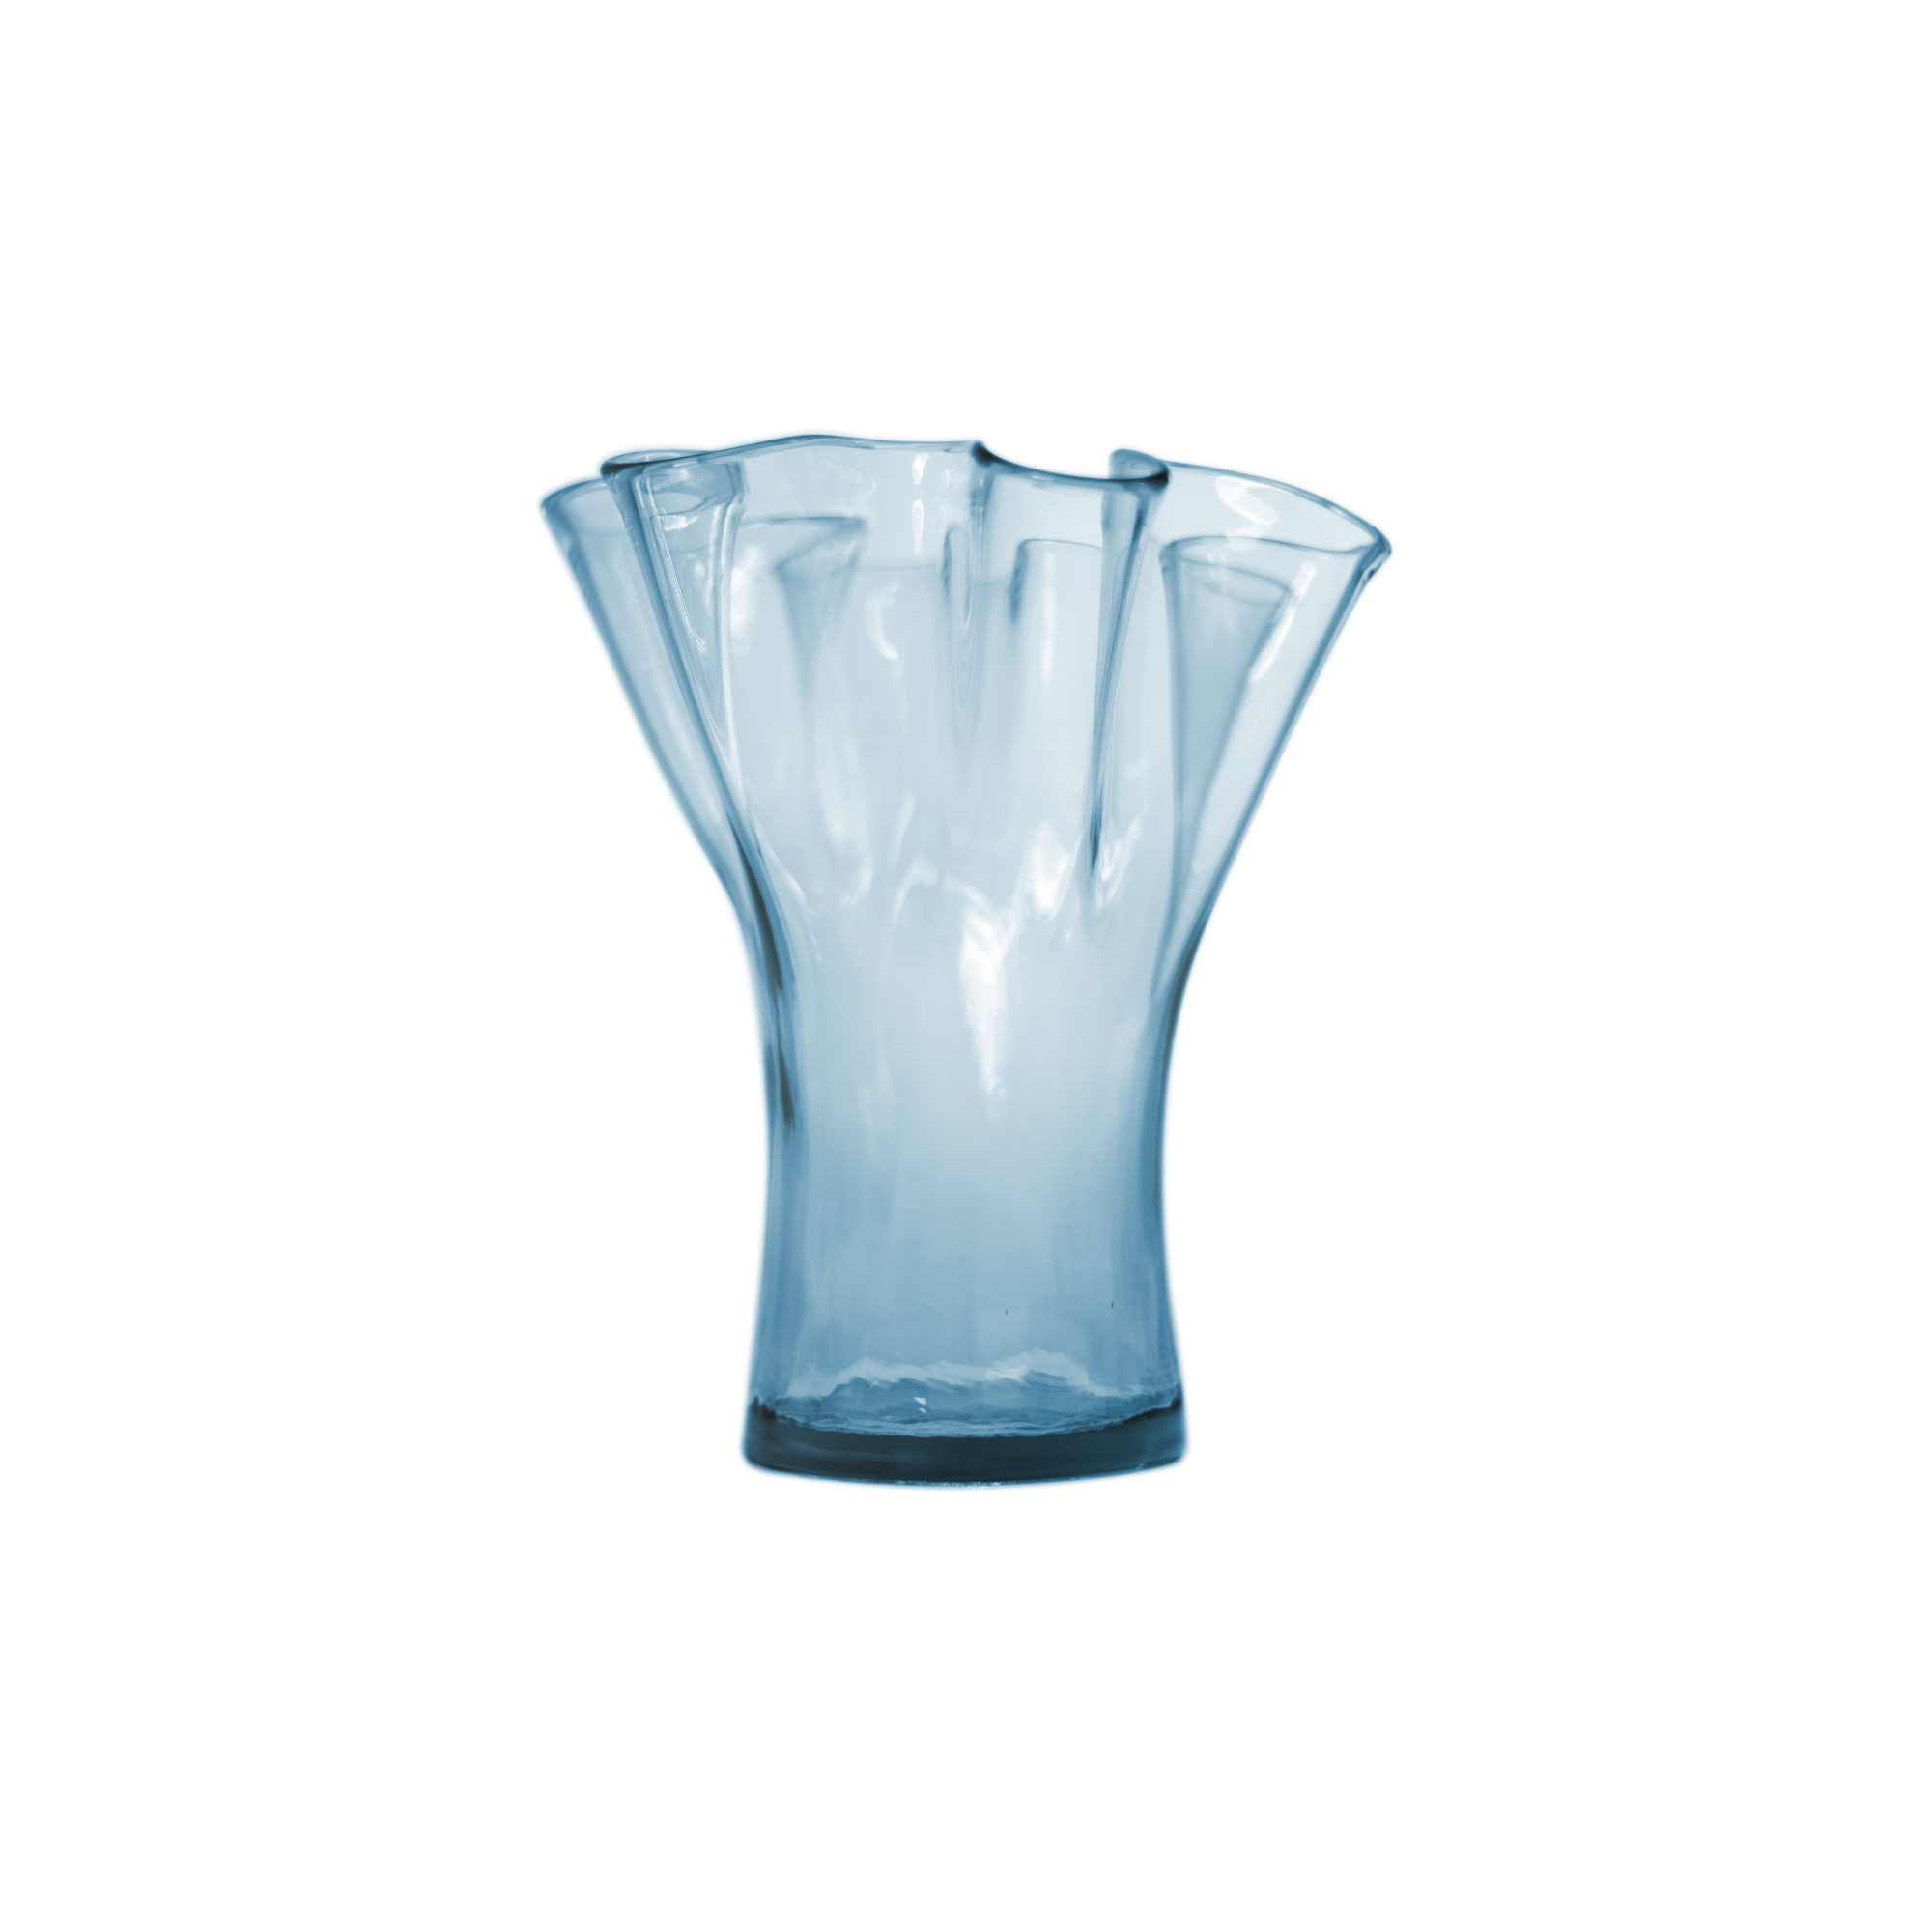 Ваза San miguel Artesania голубой 23 см ваза с крышкой glasar 17х17х26 см голубой